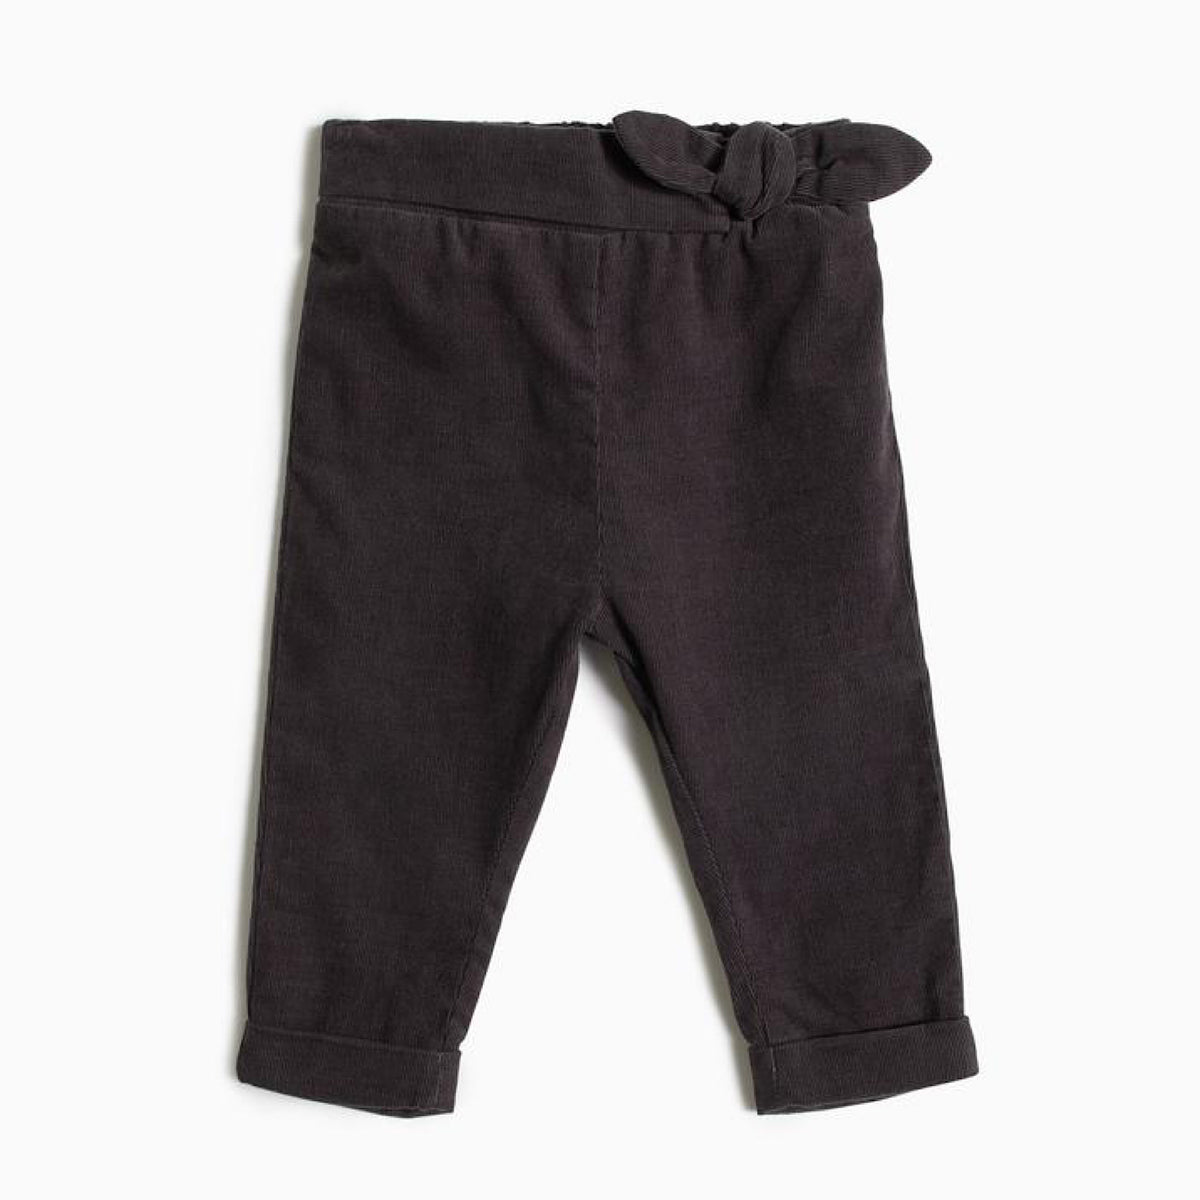 Charcoal Corduroy Pants with Bow